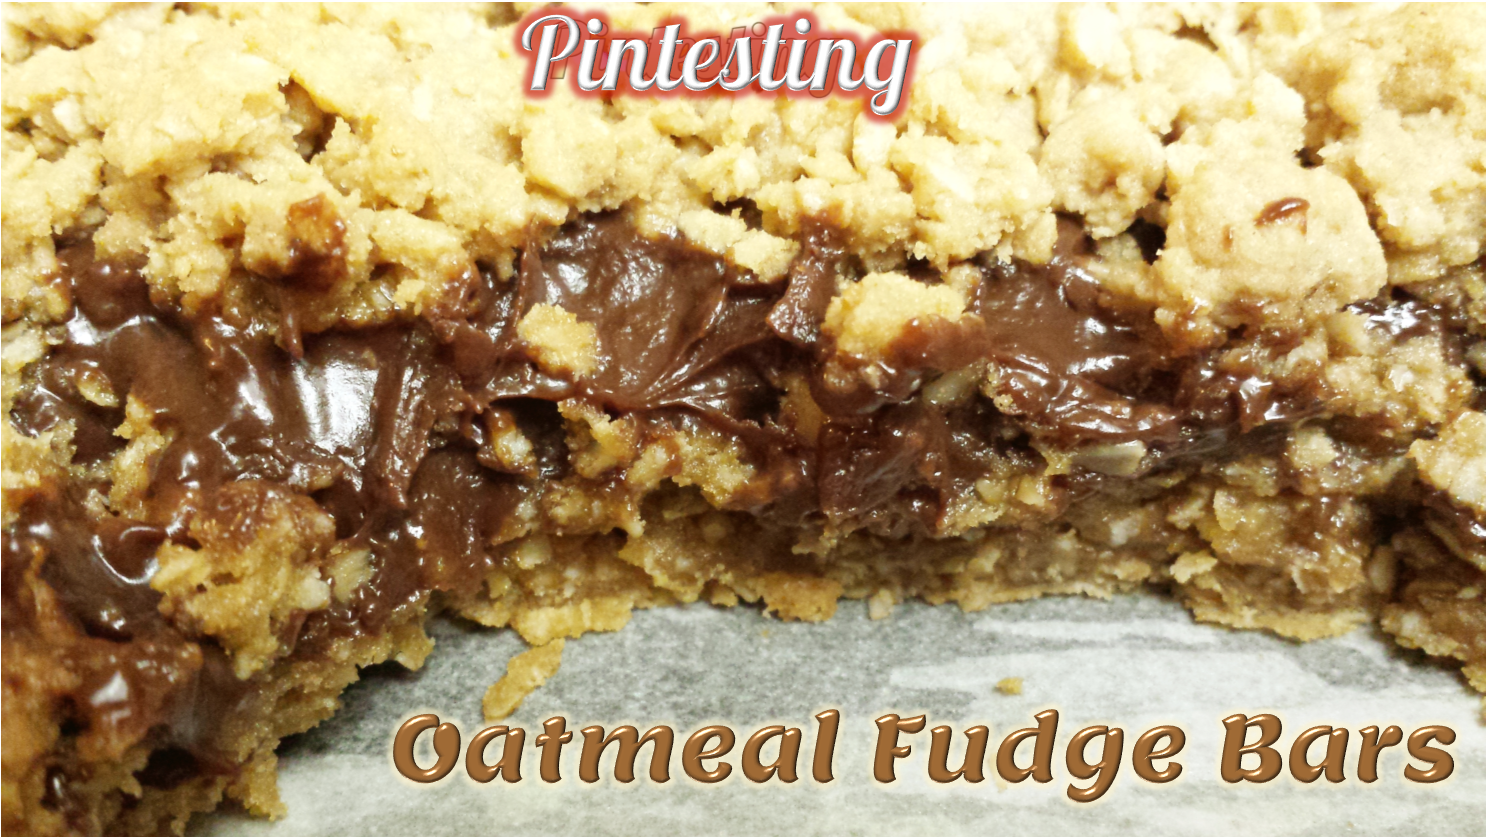 Pintesting Oatmeal Fudge Bars